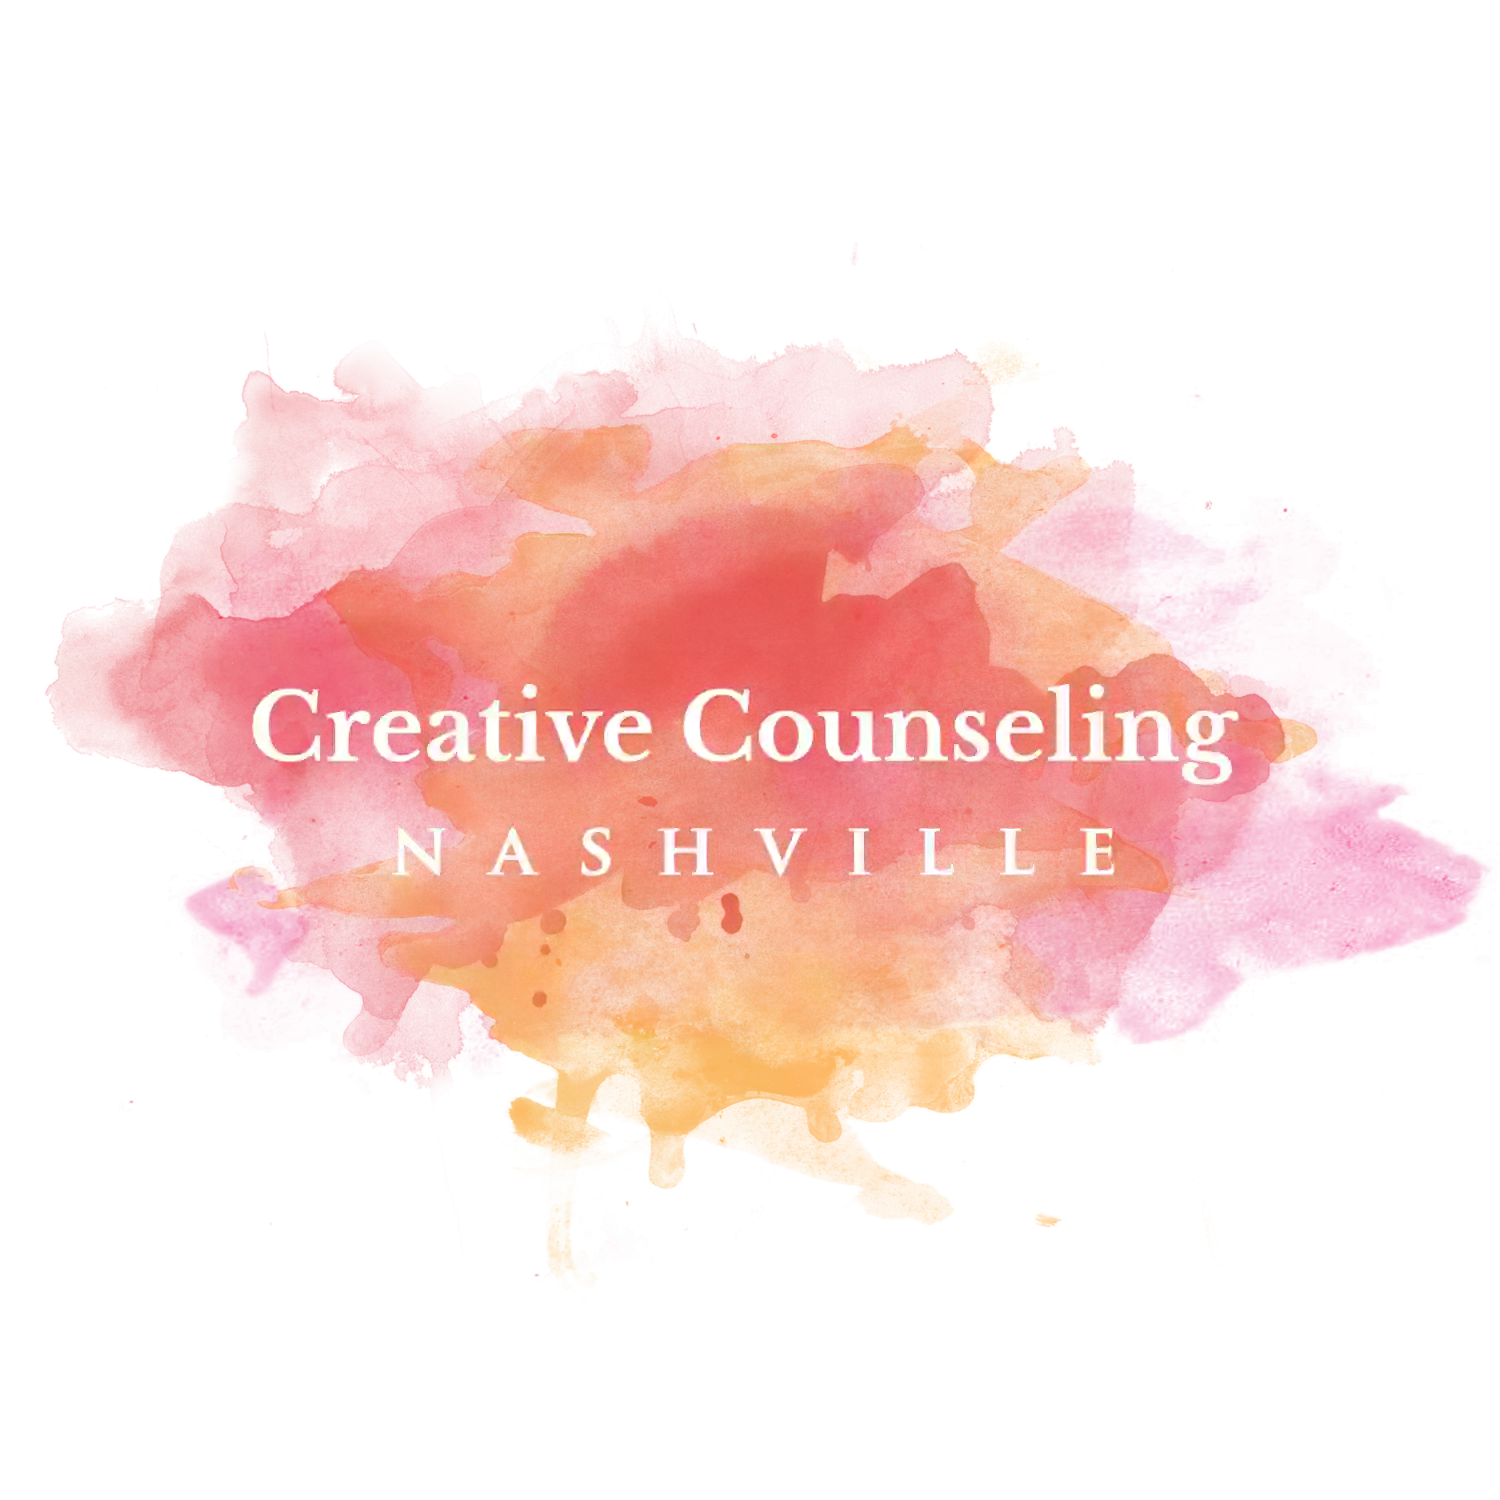 Creative Counseling Nashville